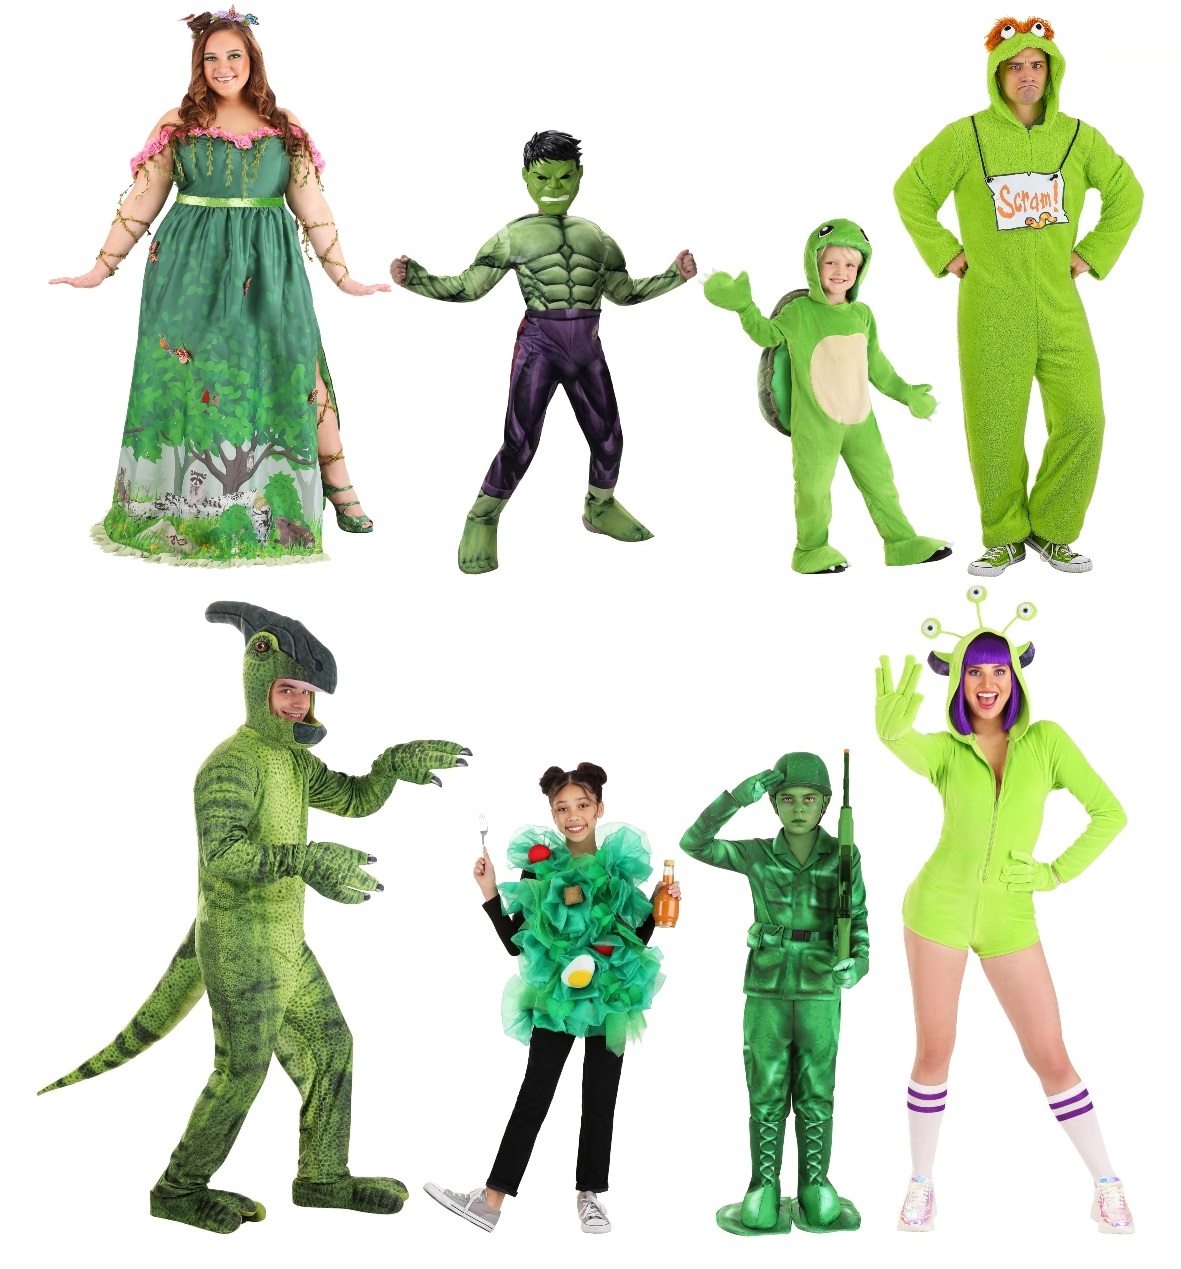 https://images.halloweencostumes.com/blog/1236/green-costumes.jpg